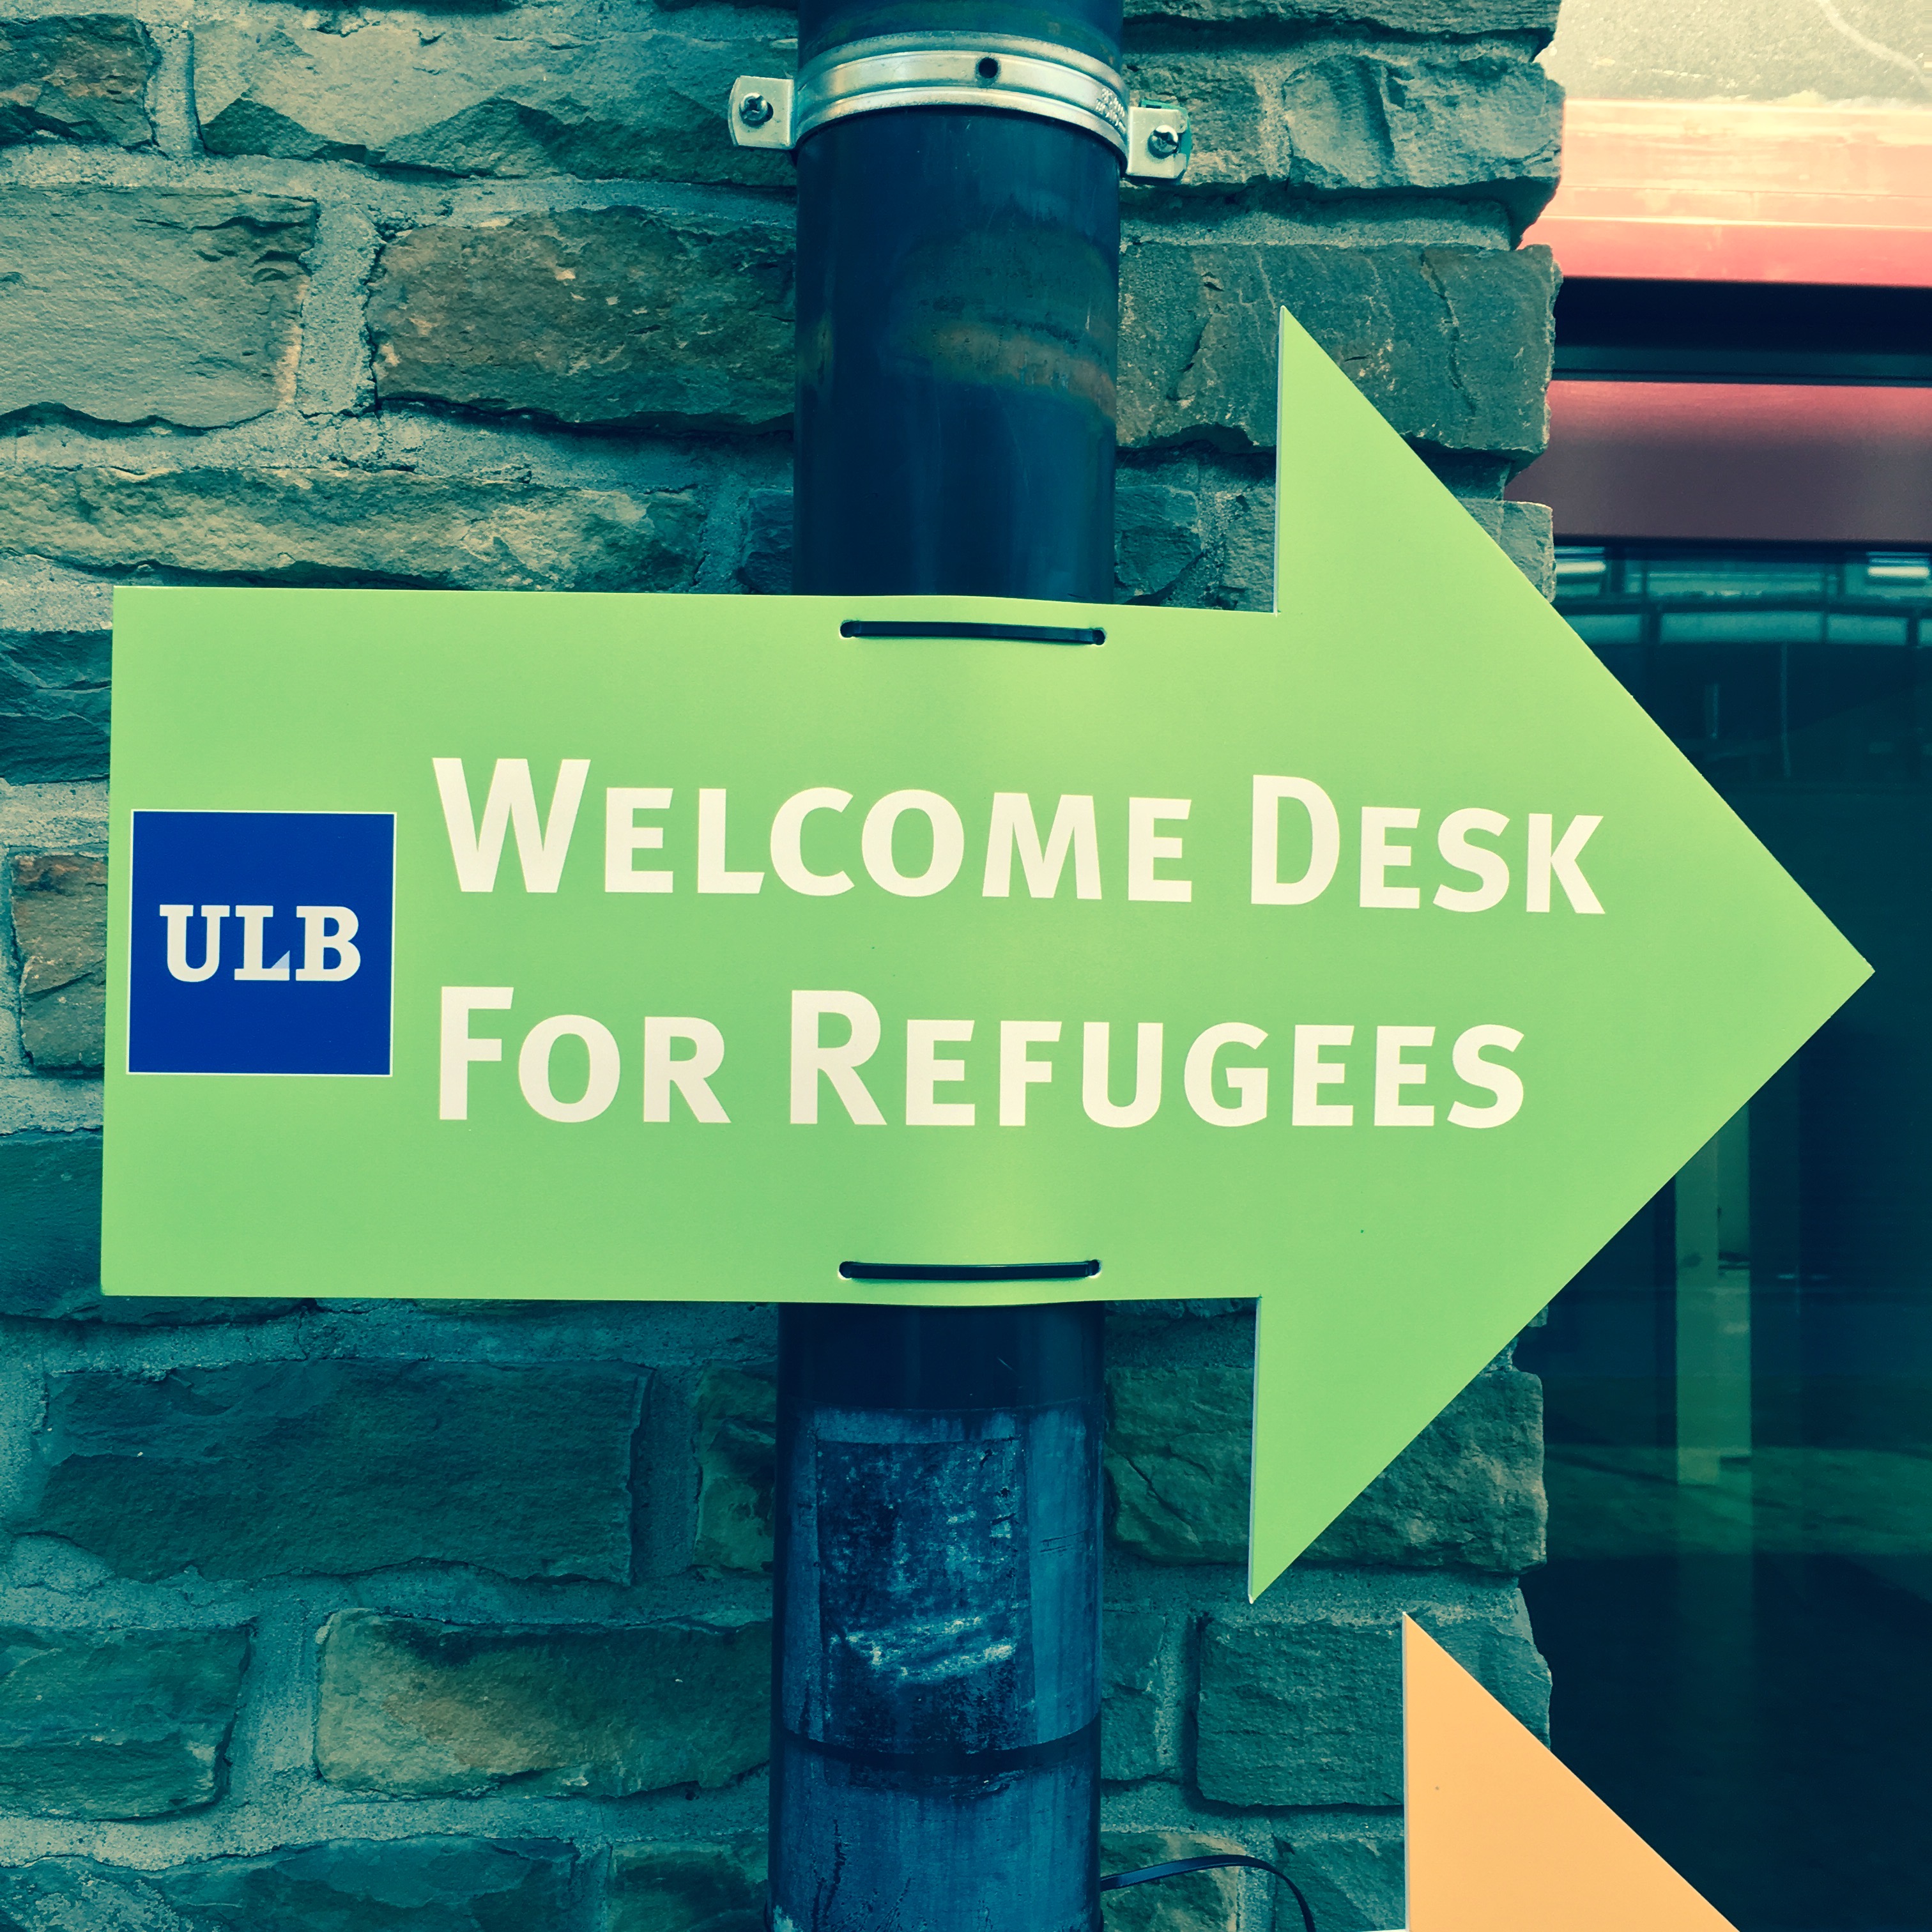 Welcome desk for refugees